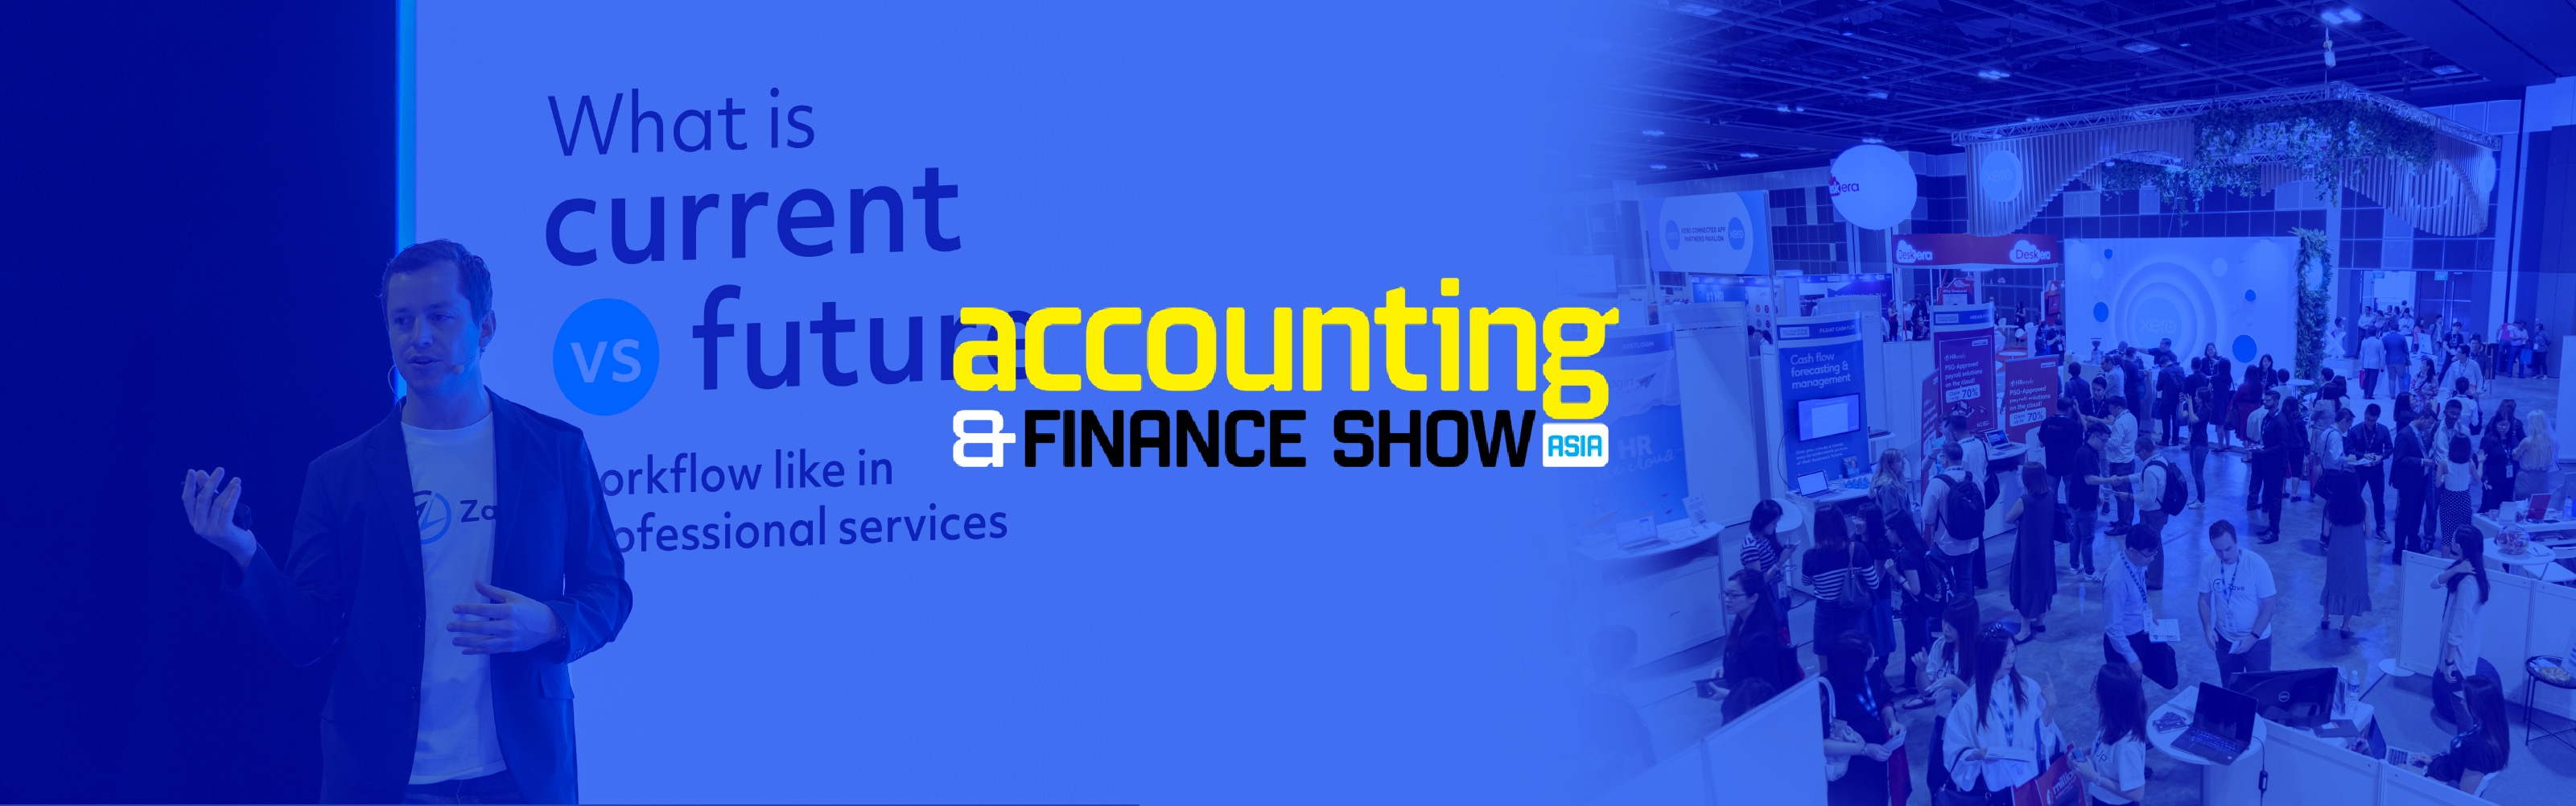 Accounting & Finance Show 2019